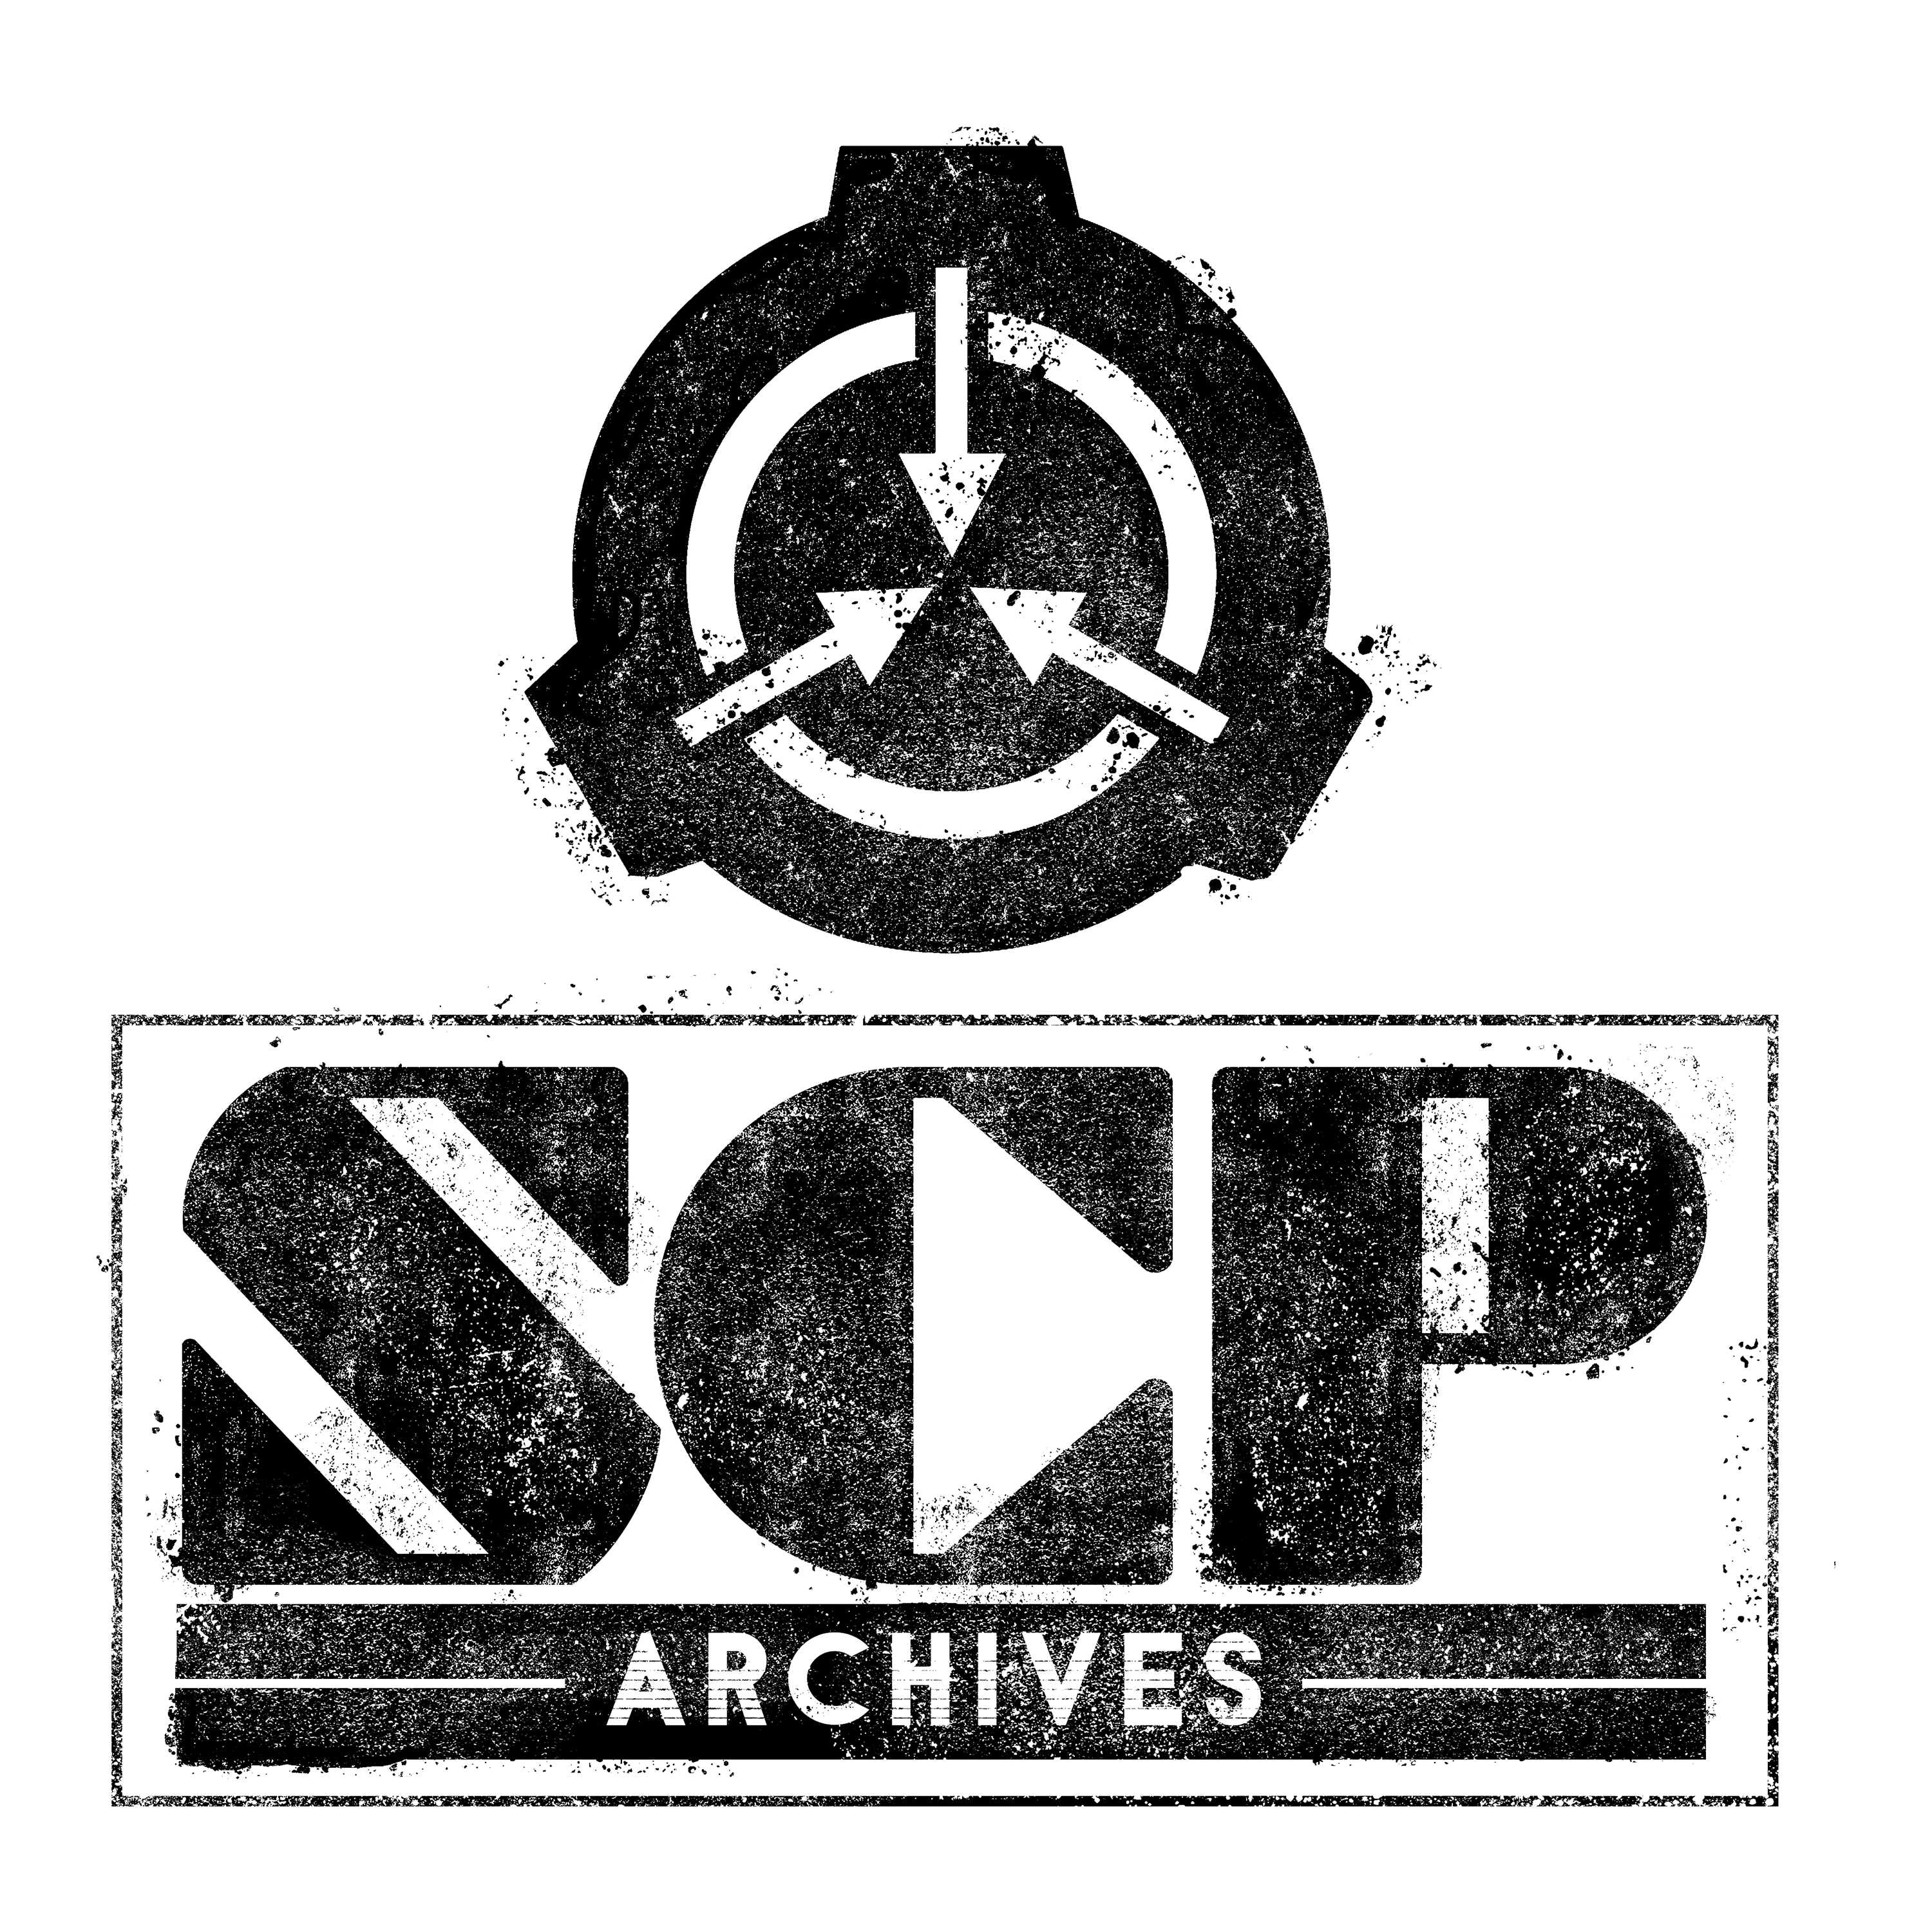 SCP-1173-A: The Islamic Republic of Eastern Samothrace